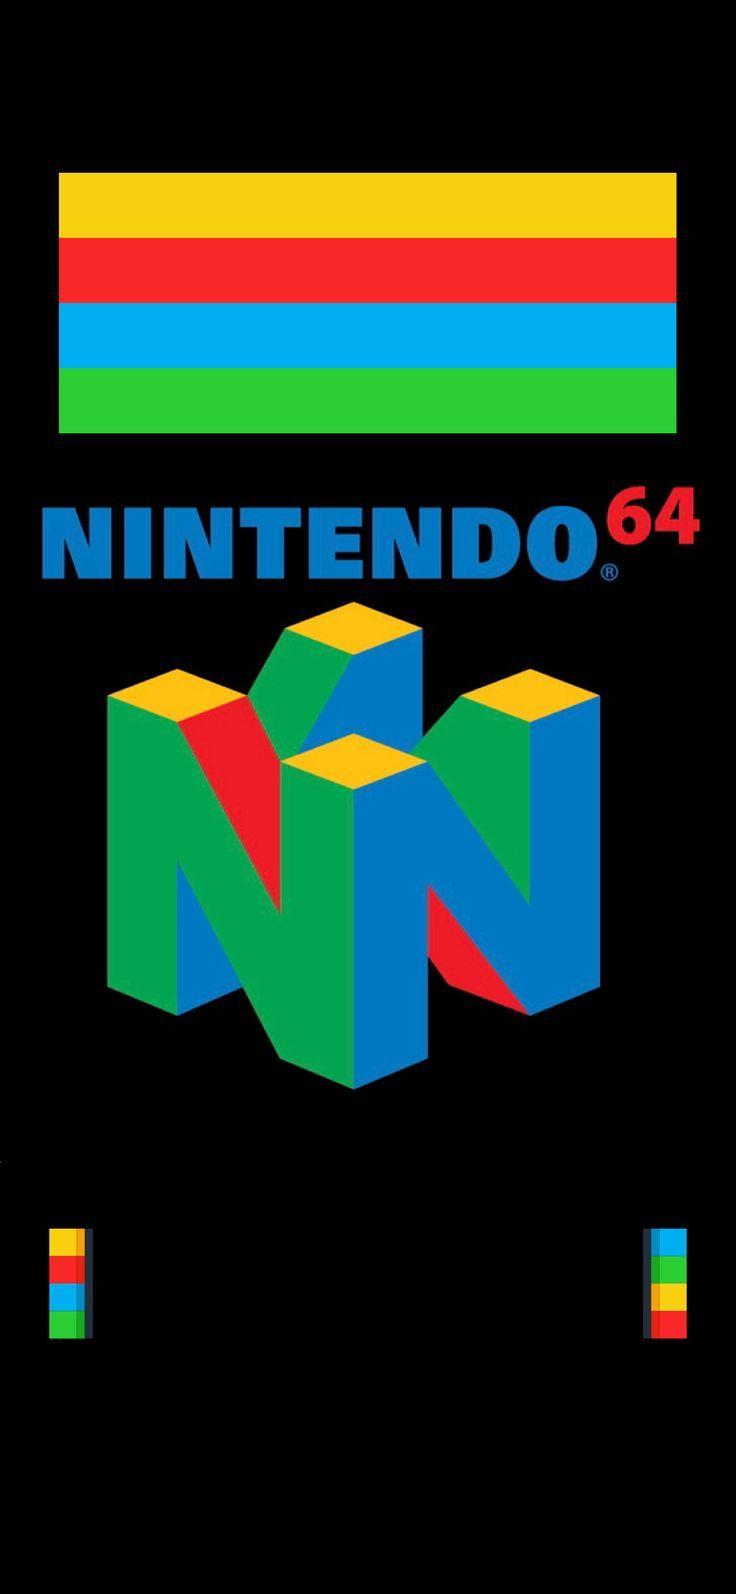 nintendo 64 logo wallpaper